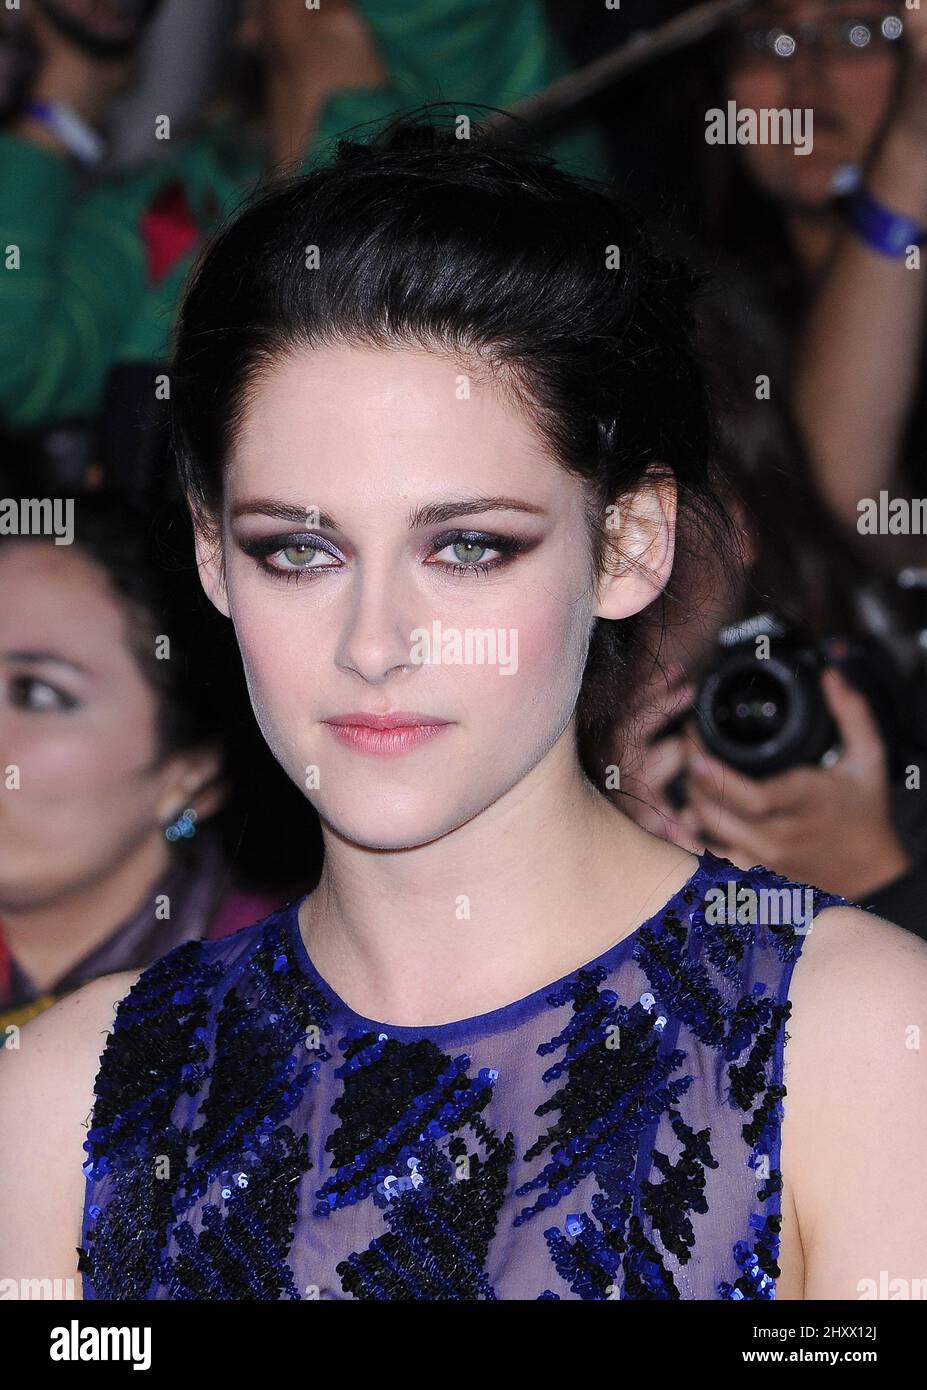 Kristen Stewart attending the premiere of 'The Twilight Saga: Breaking Dawn - Part 1' in Los Angeles, USA. Stock Photo